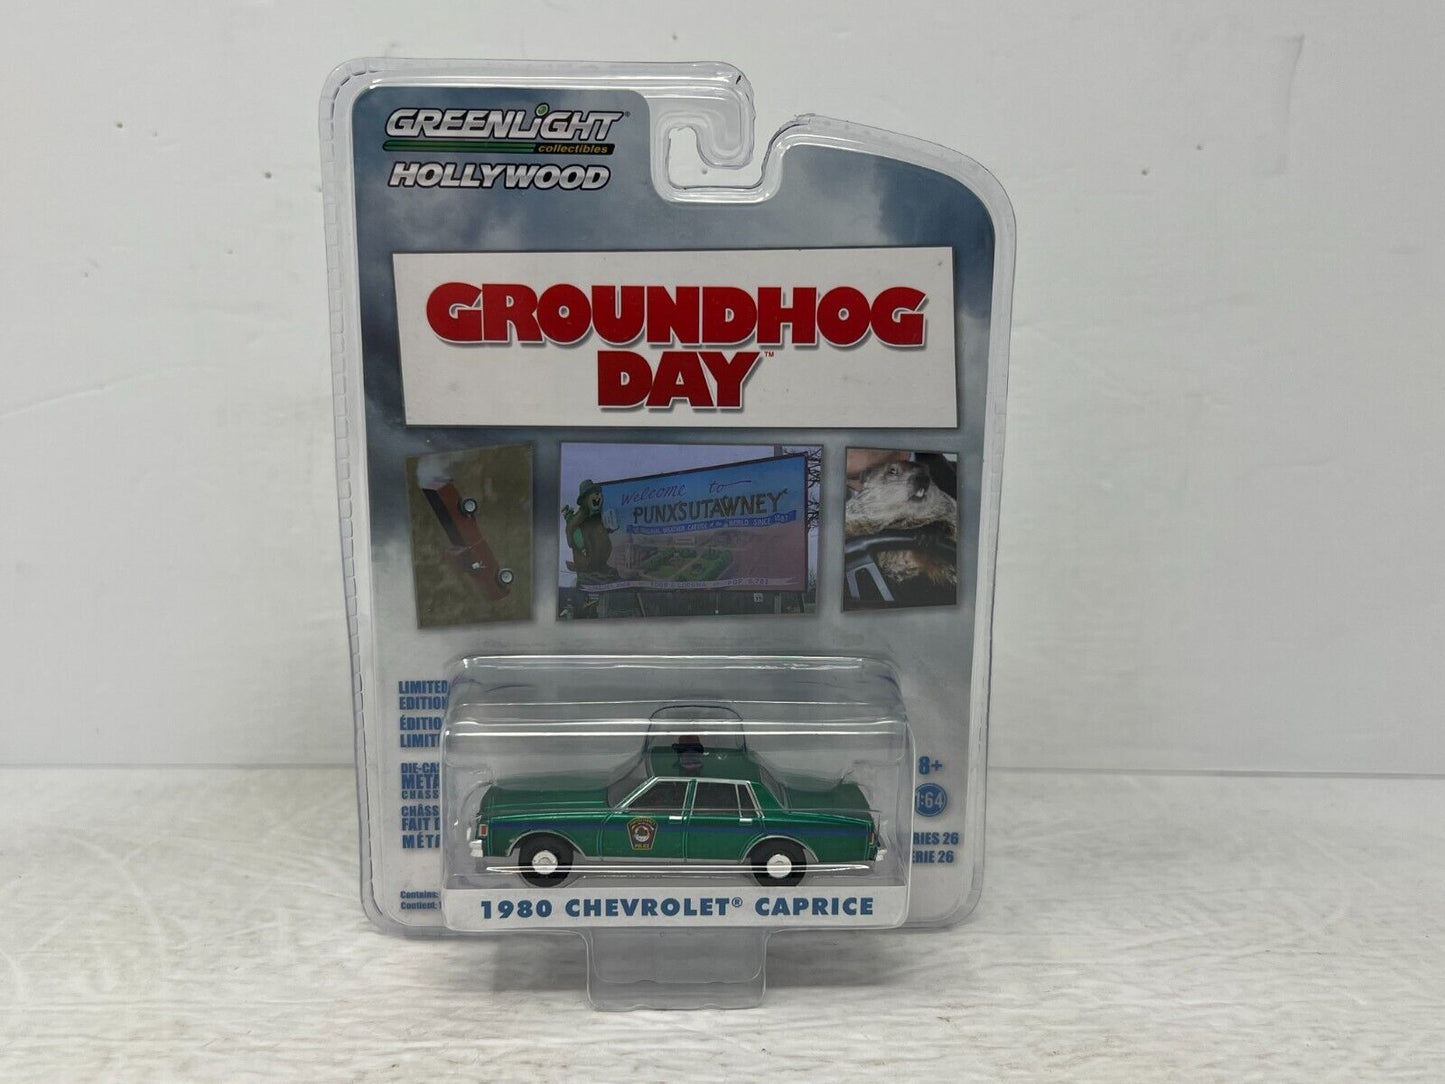 Greenlight Hollywood 1980 Chevrolet Caprice Green Machine 1:64 Diecast